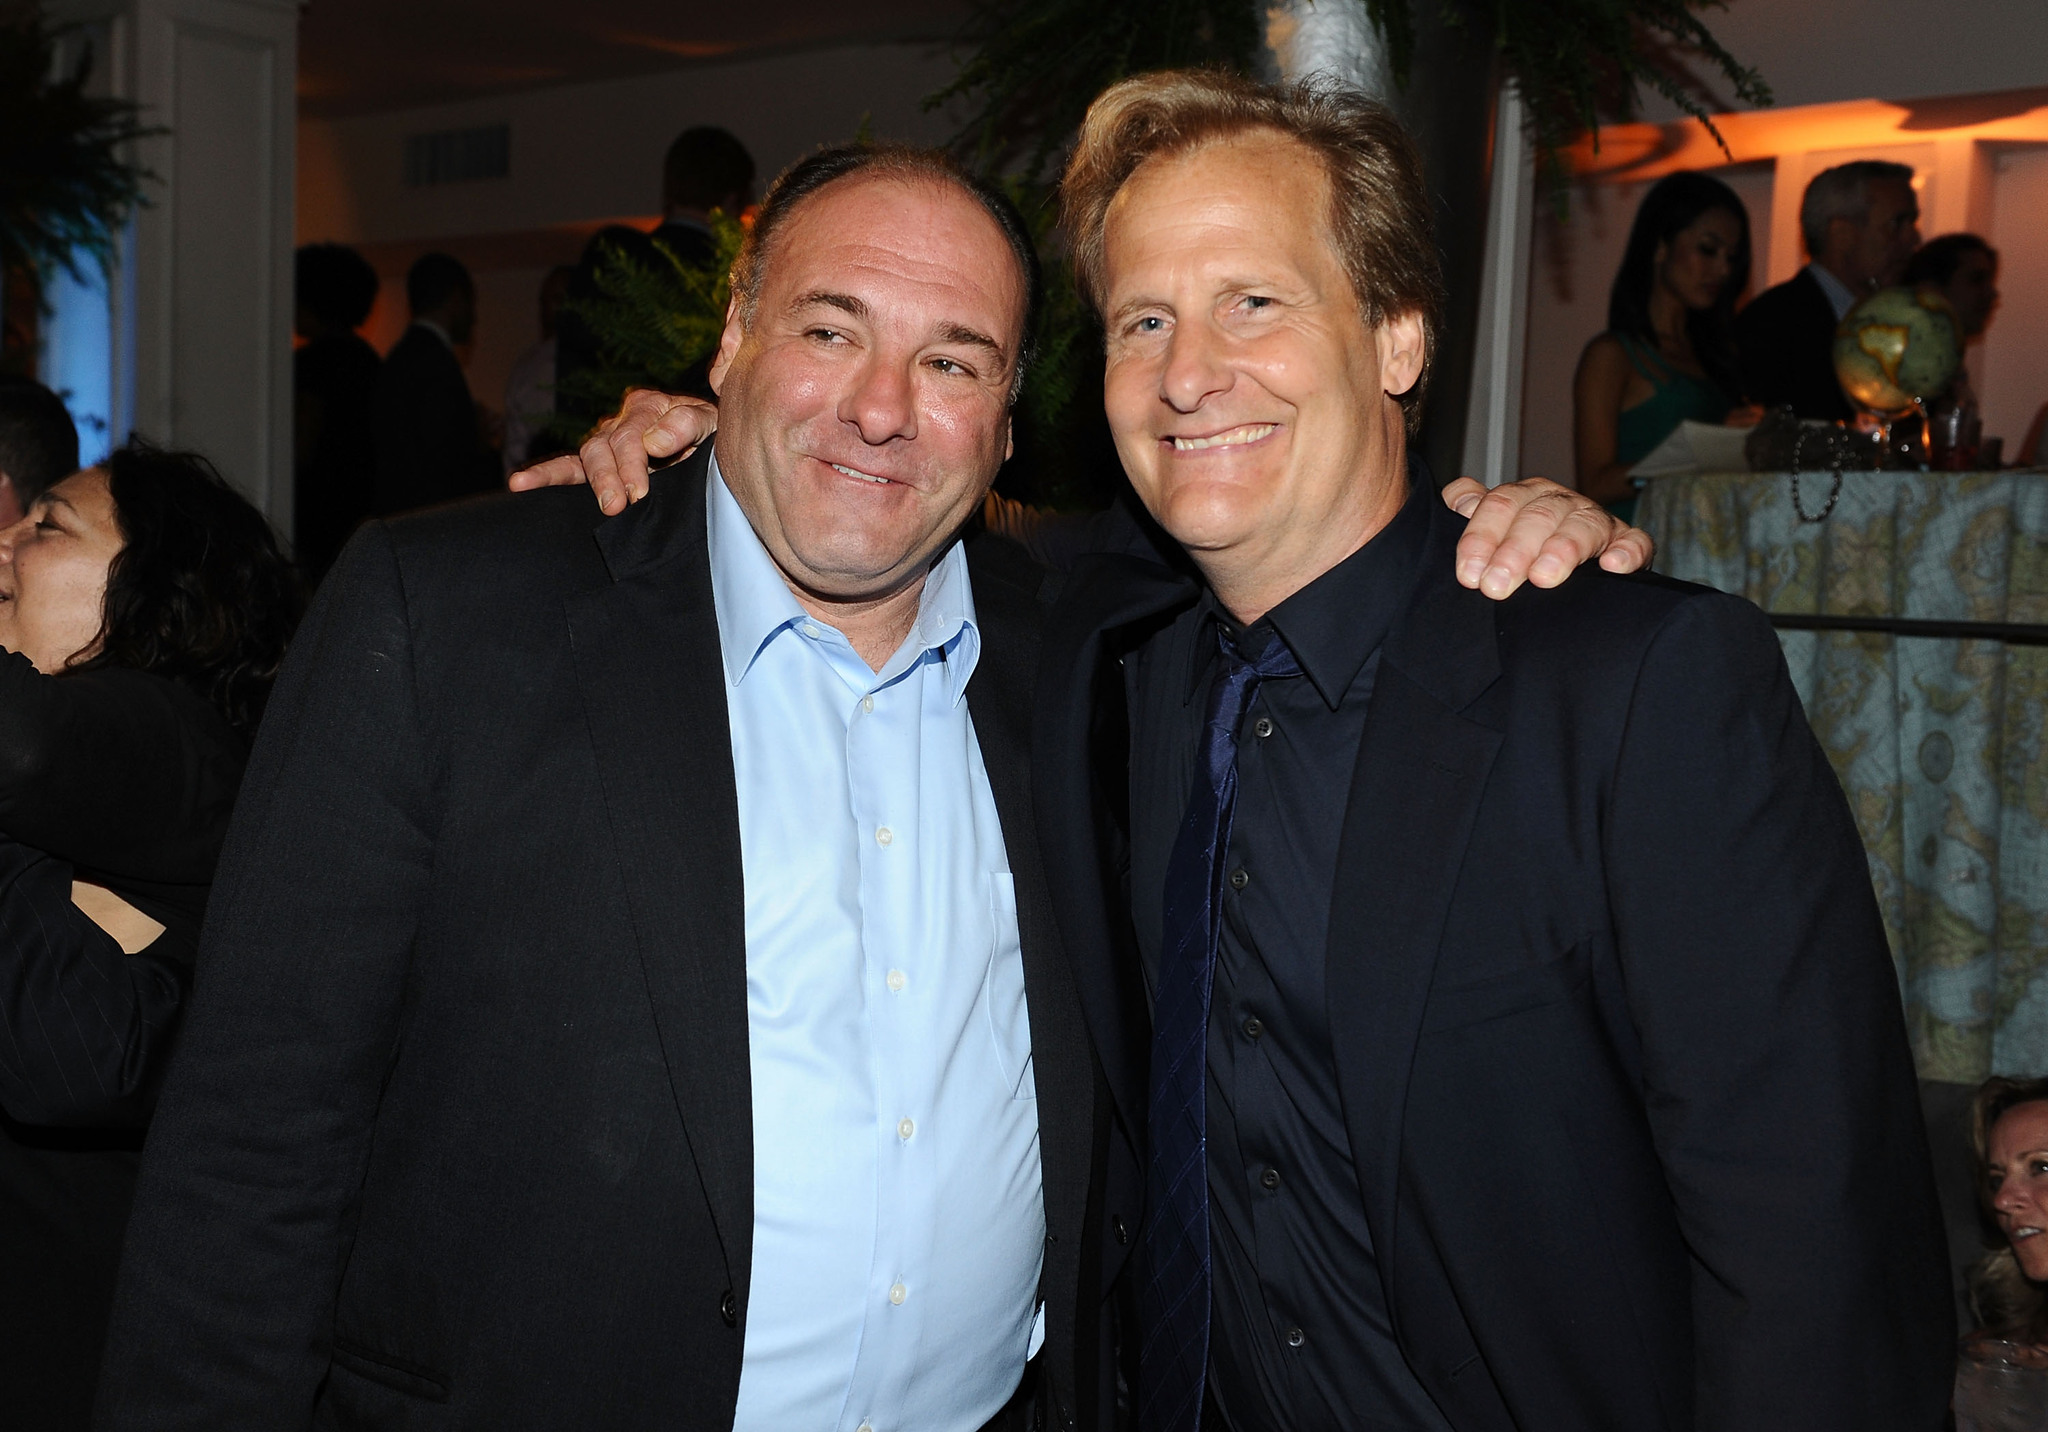 Jeff Daniels and James Gandolfini at event of The Newsroom (2012)